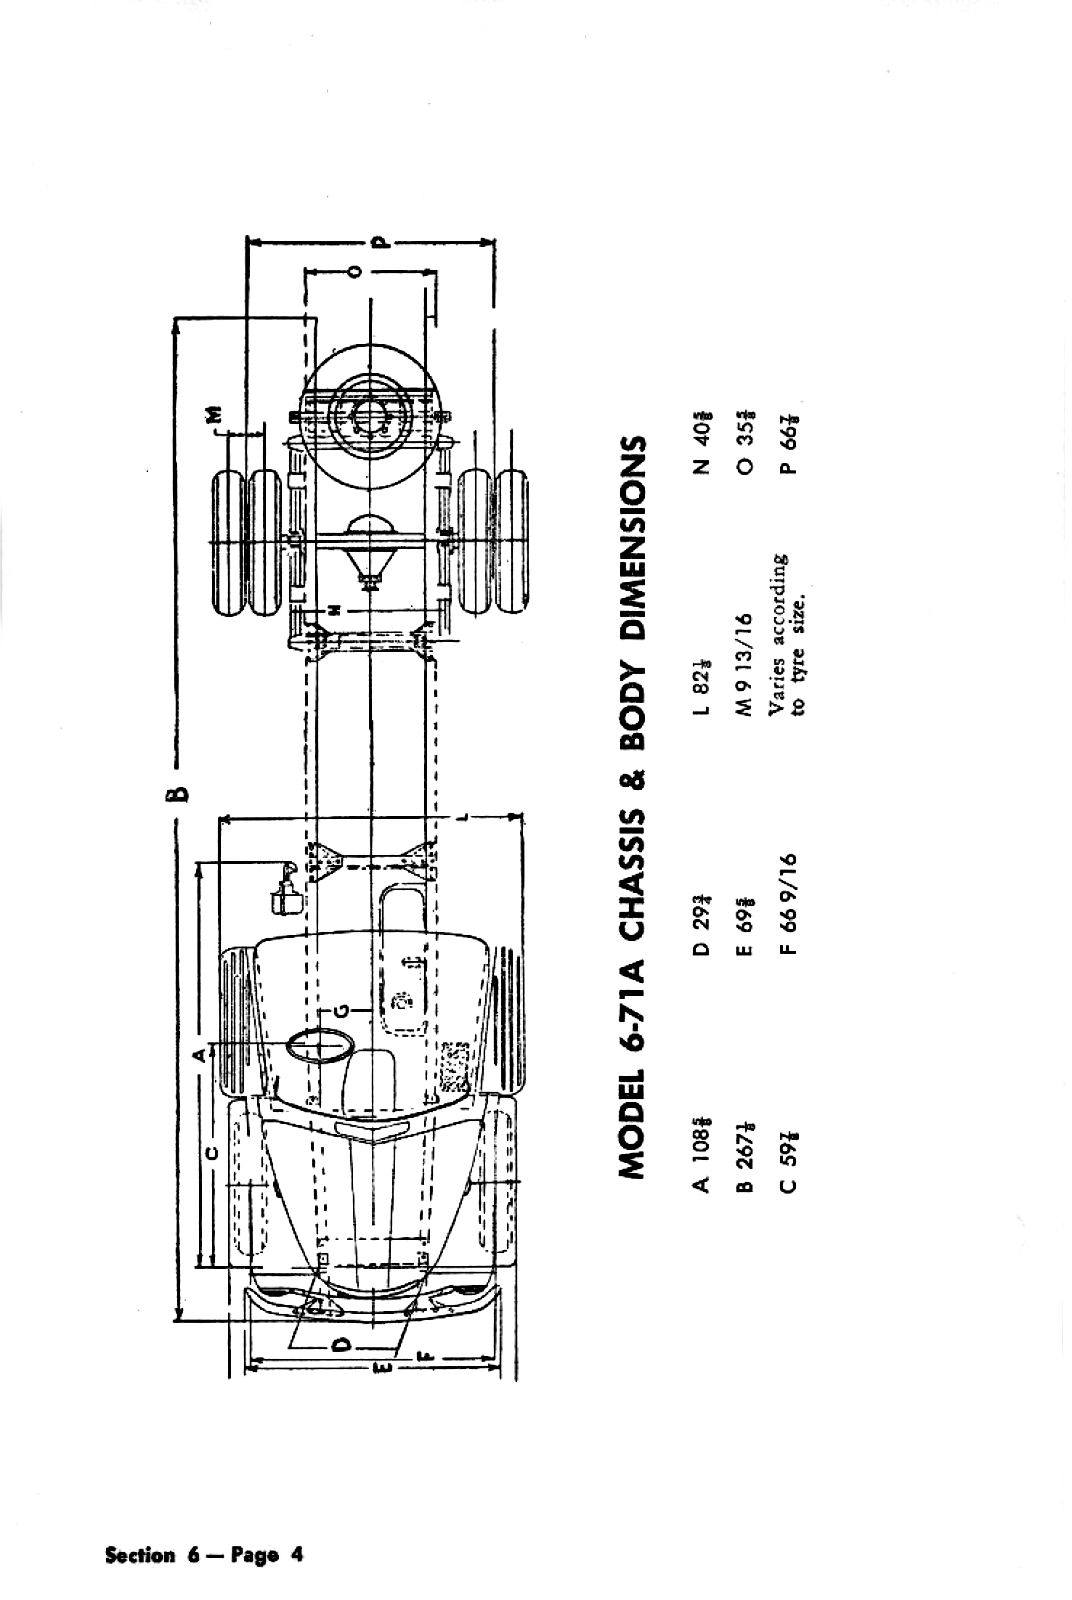 1953 Chrysler Truck Sales Manual (Aus)-06-04